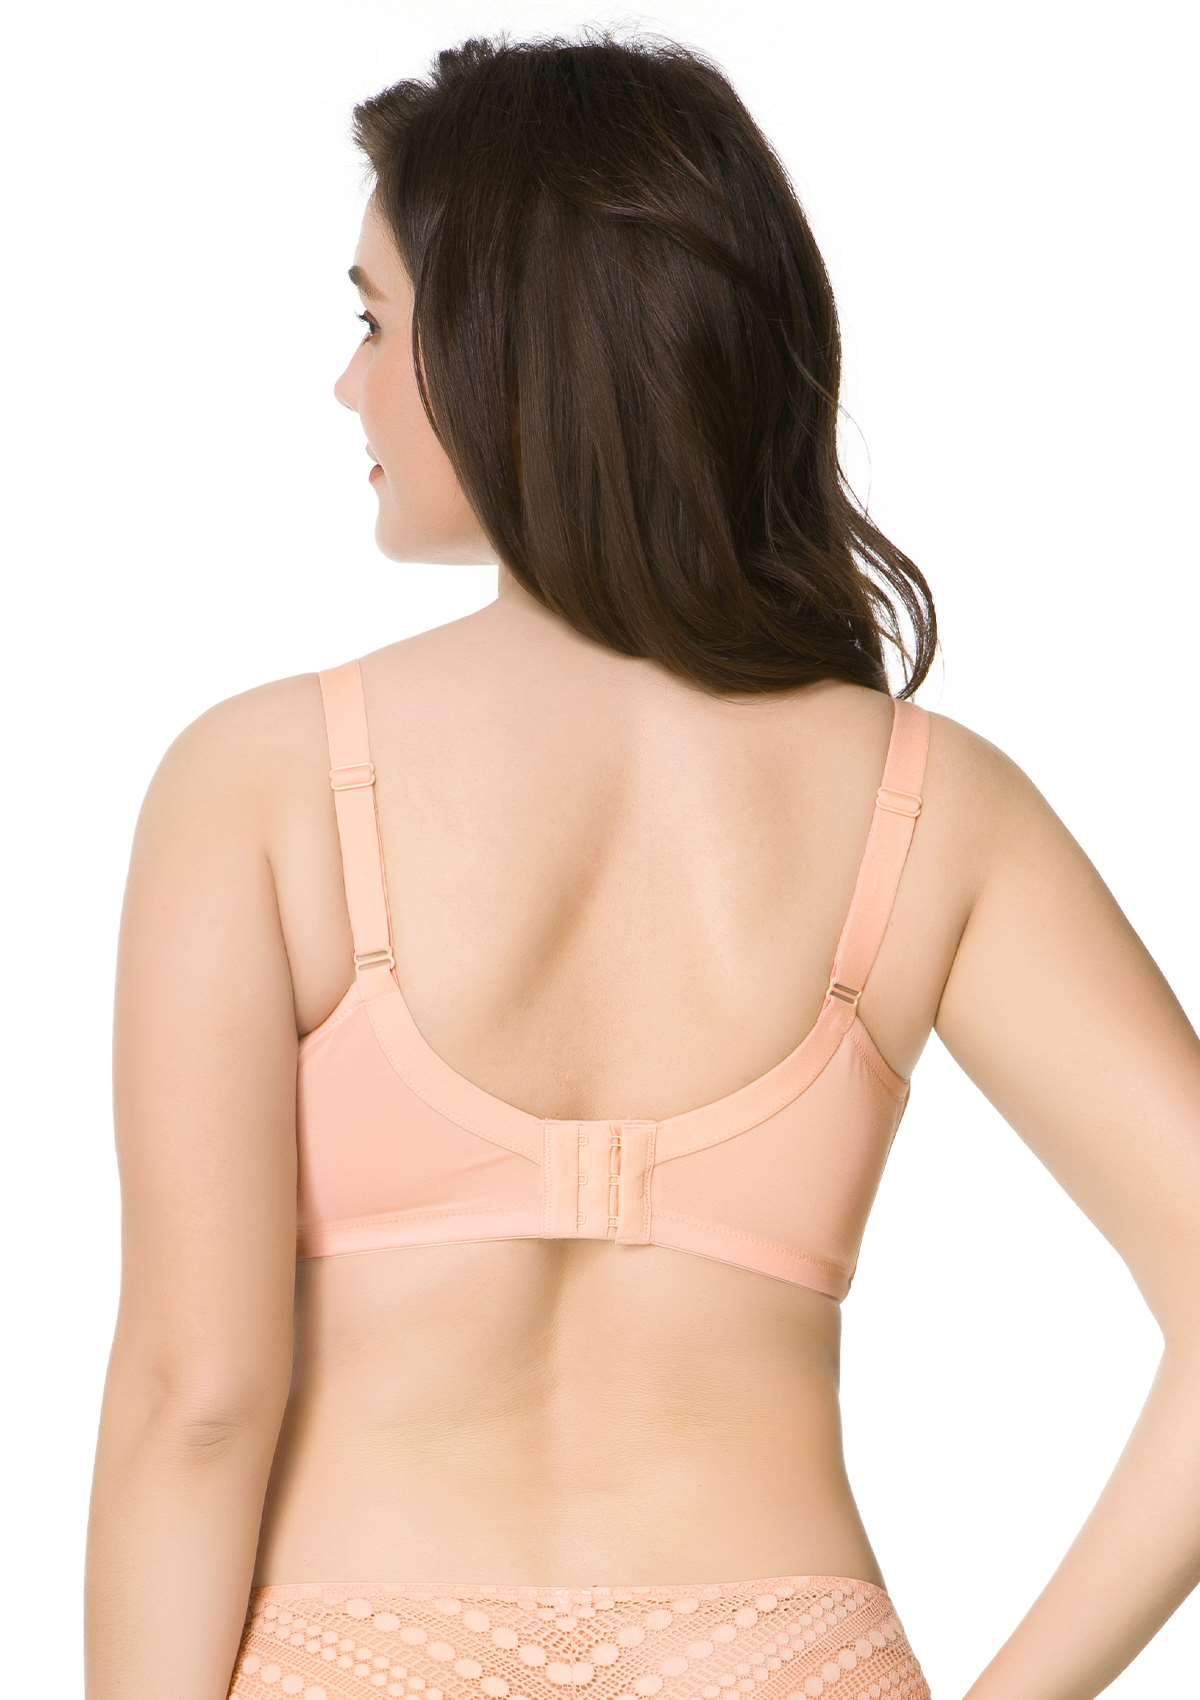 HSIA Heroine Lace Bra And Panty: Best Full Figure Minimizer Bra - Rose Cloud / 36 / D